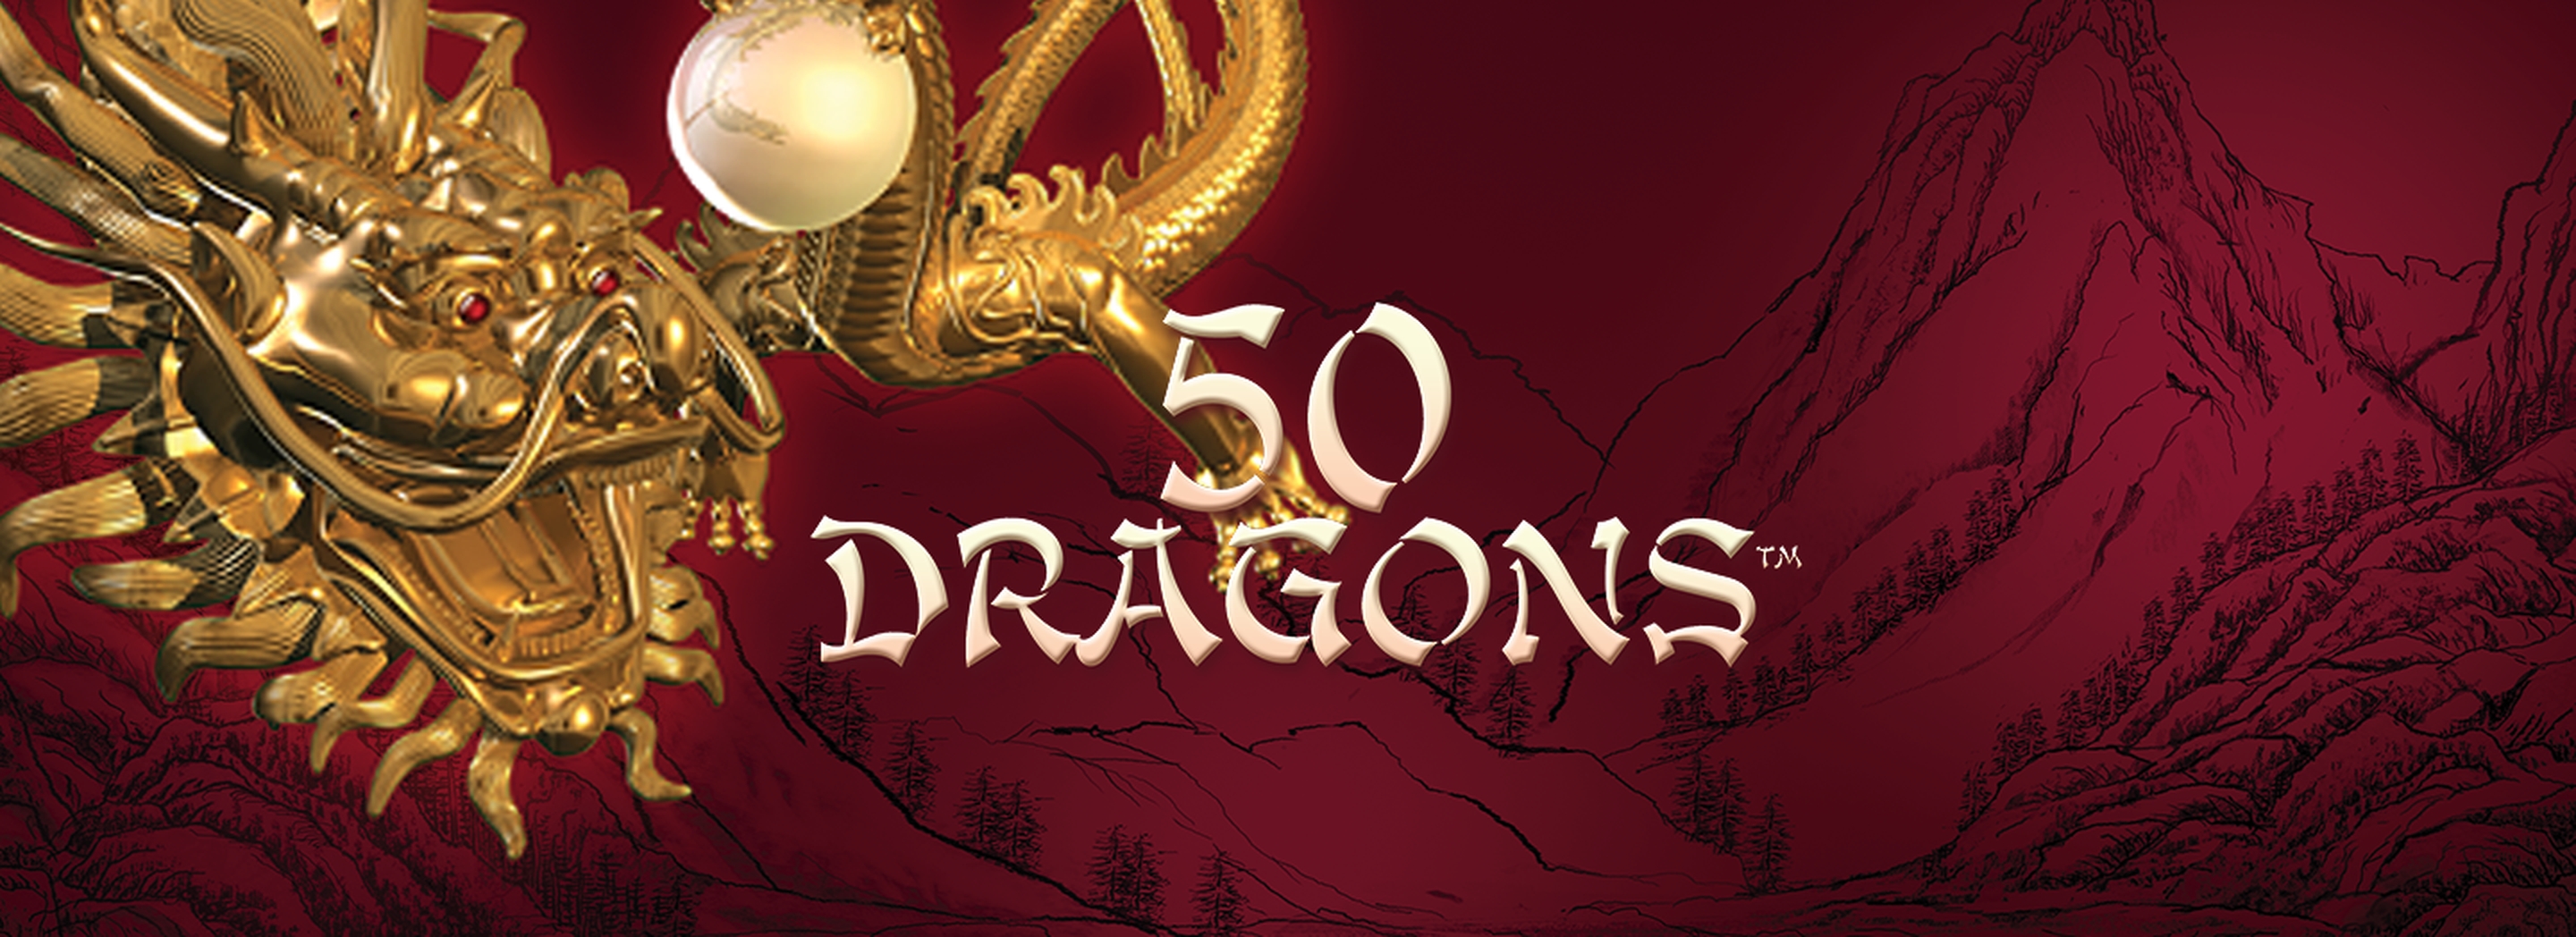 50 Dragons demo